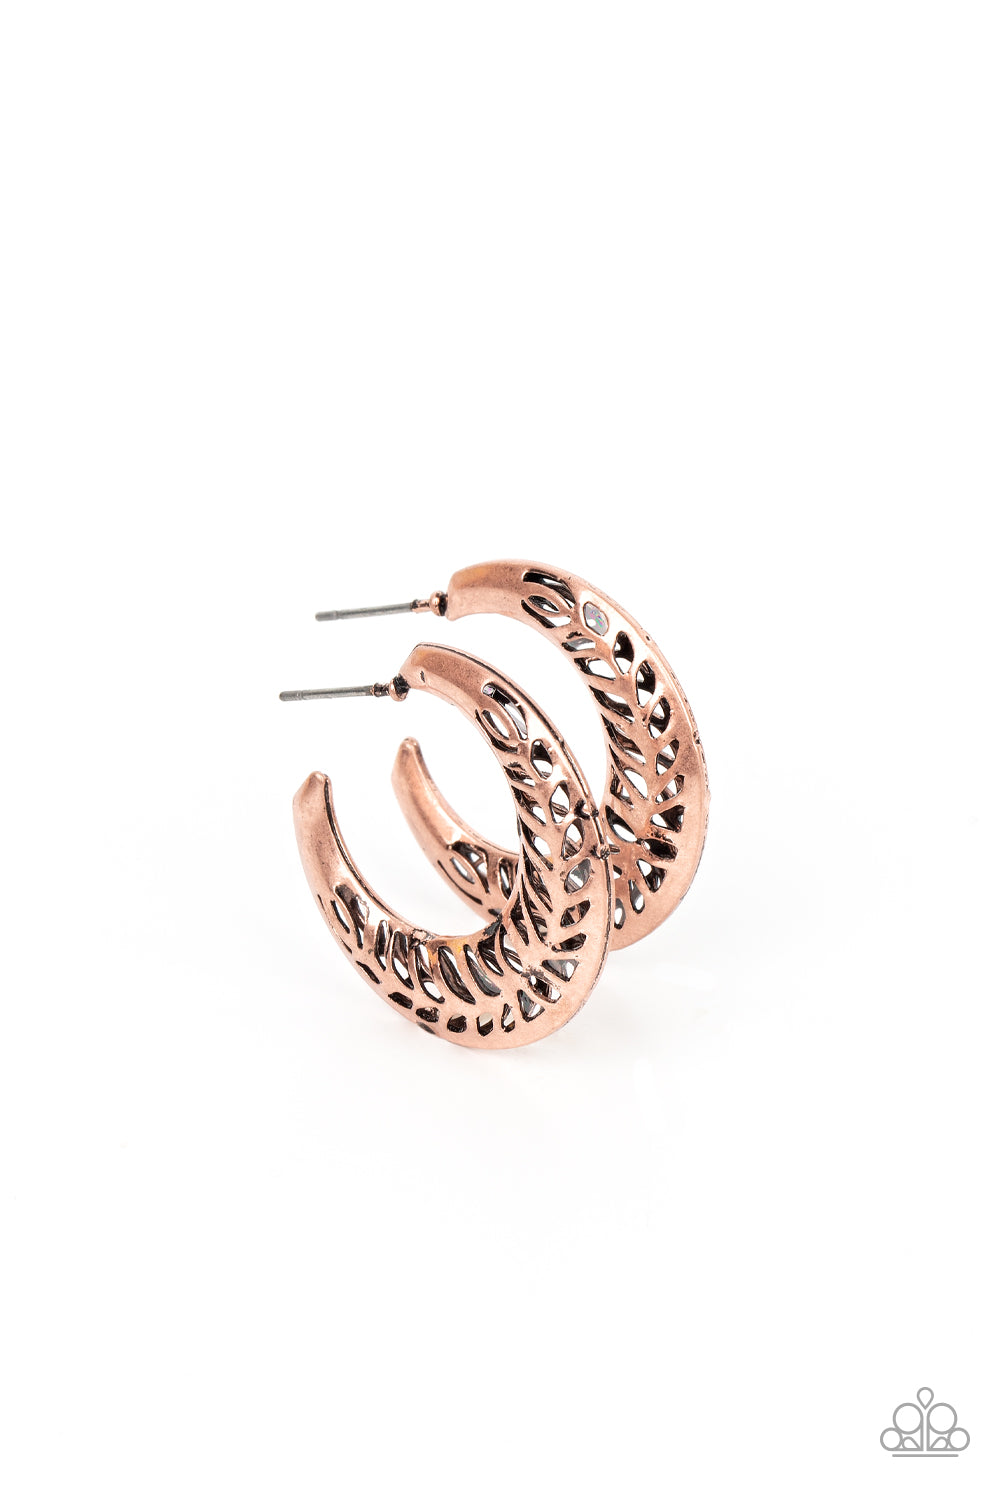 Wanderlust Wilderness - Copper Hoop Earrings - Paparazzi Accessories Bejeweled Accessories By Kristie